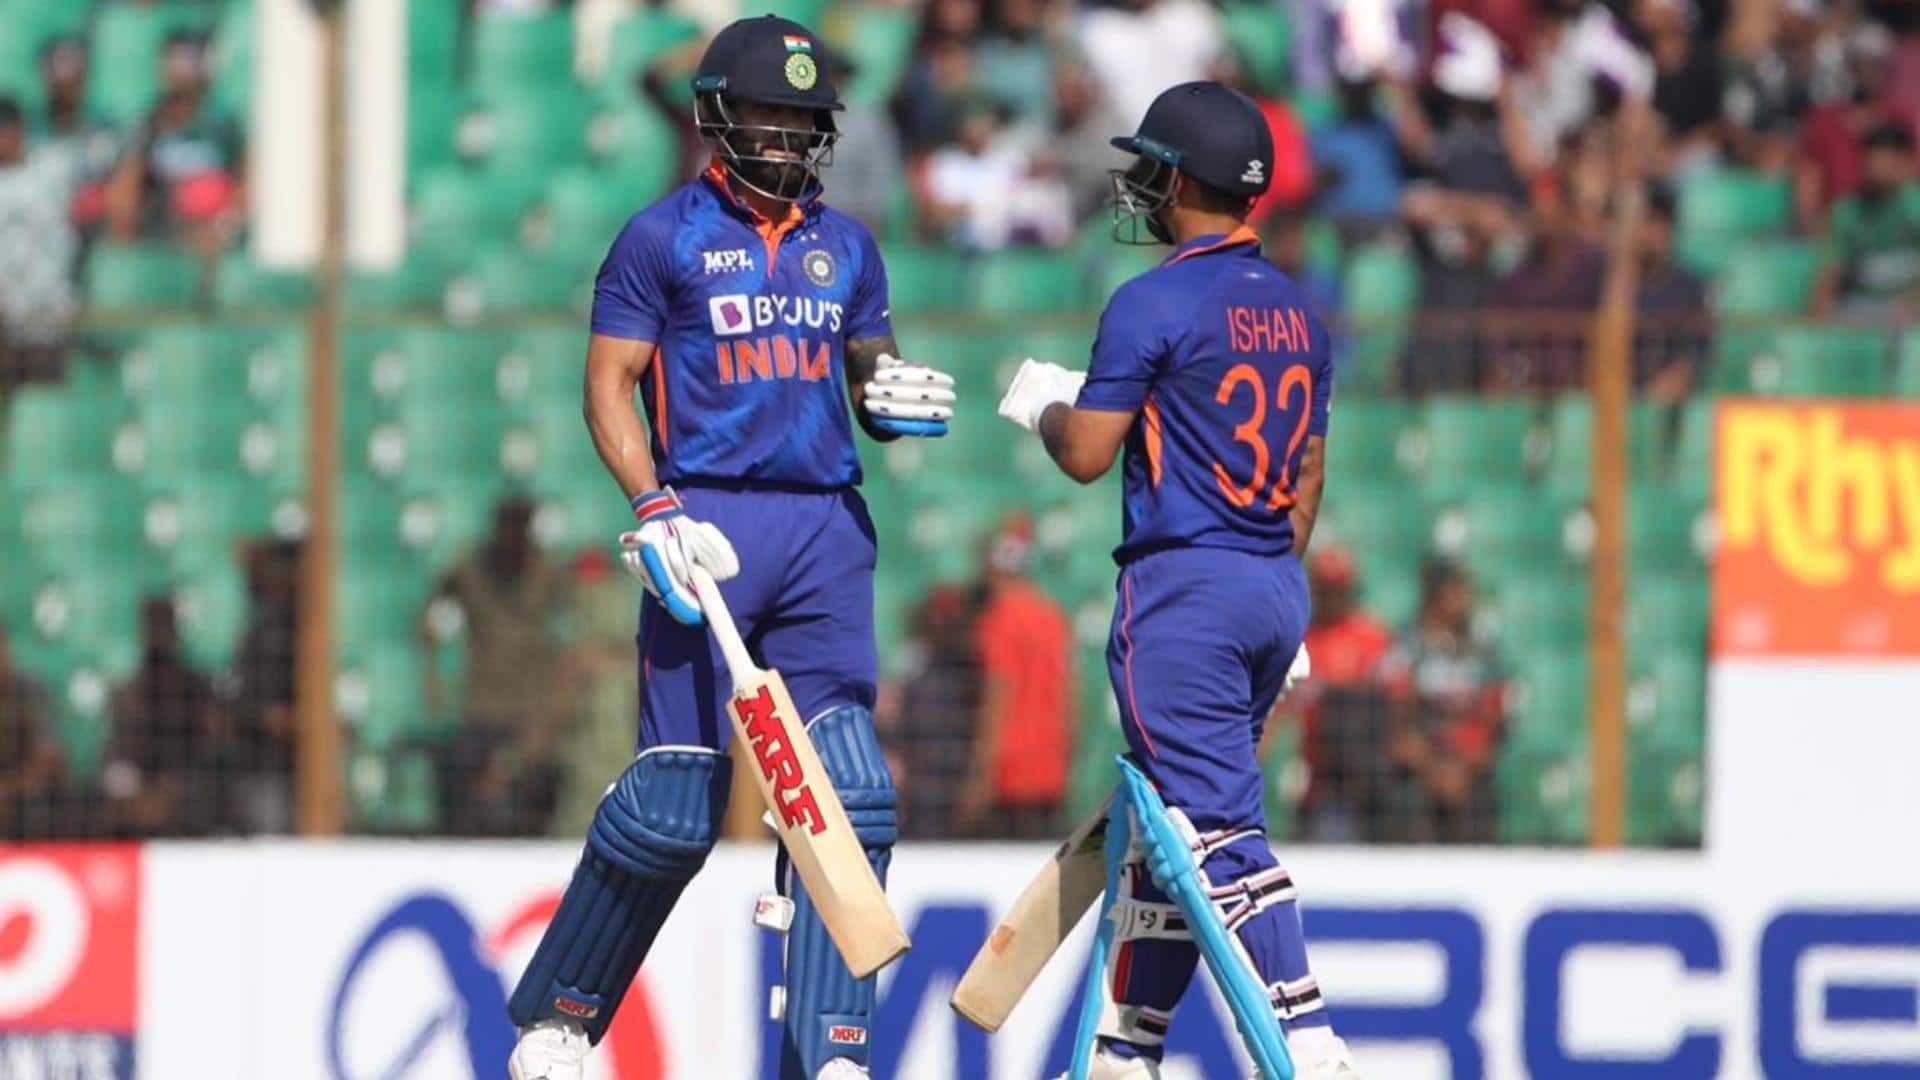 Ishan Kishan clocks his maiden ODI century: Key stats